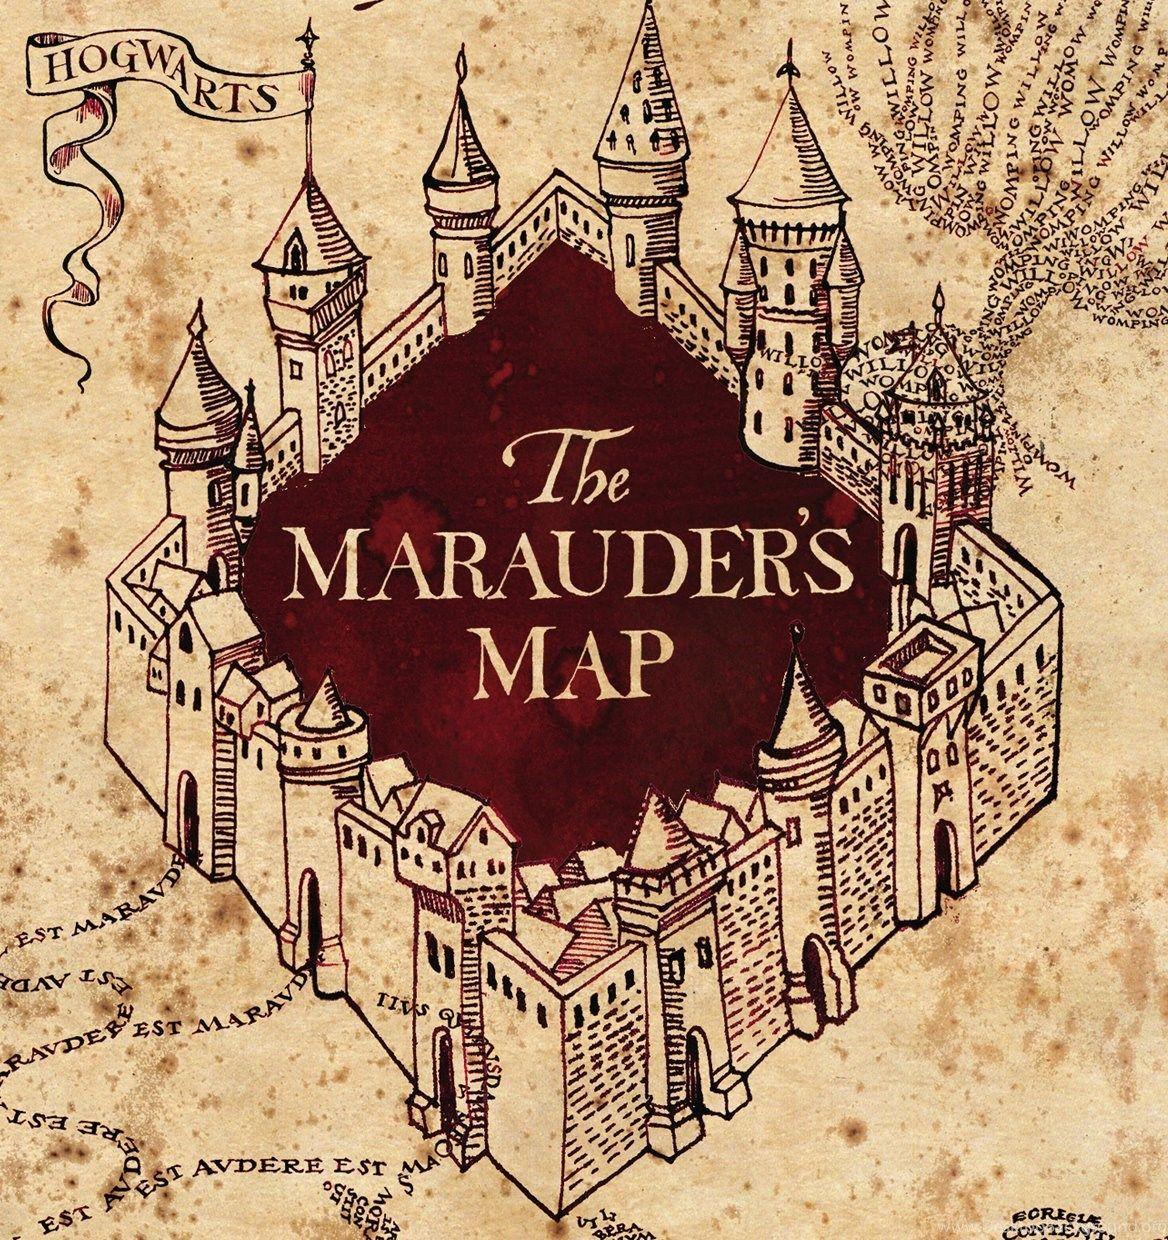 Download Harry Potter Marauders Map Wallpaper | Wallpapers.com